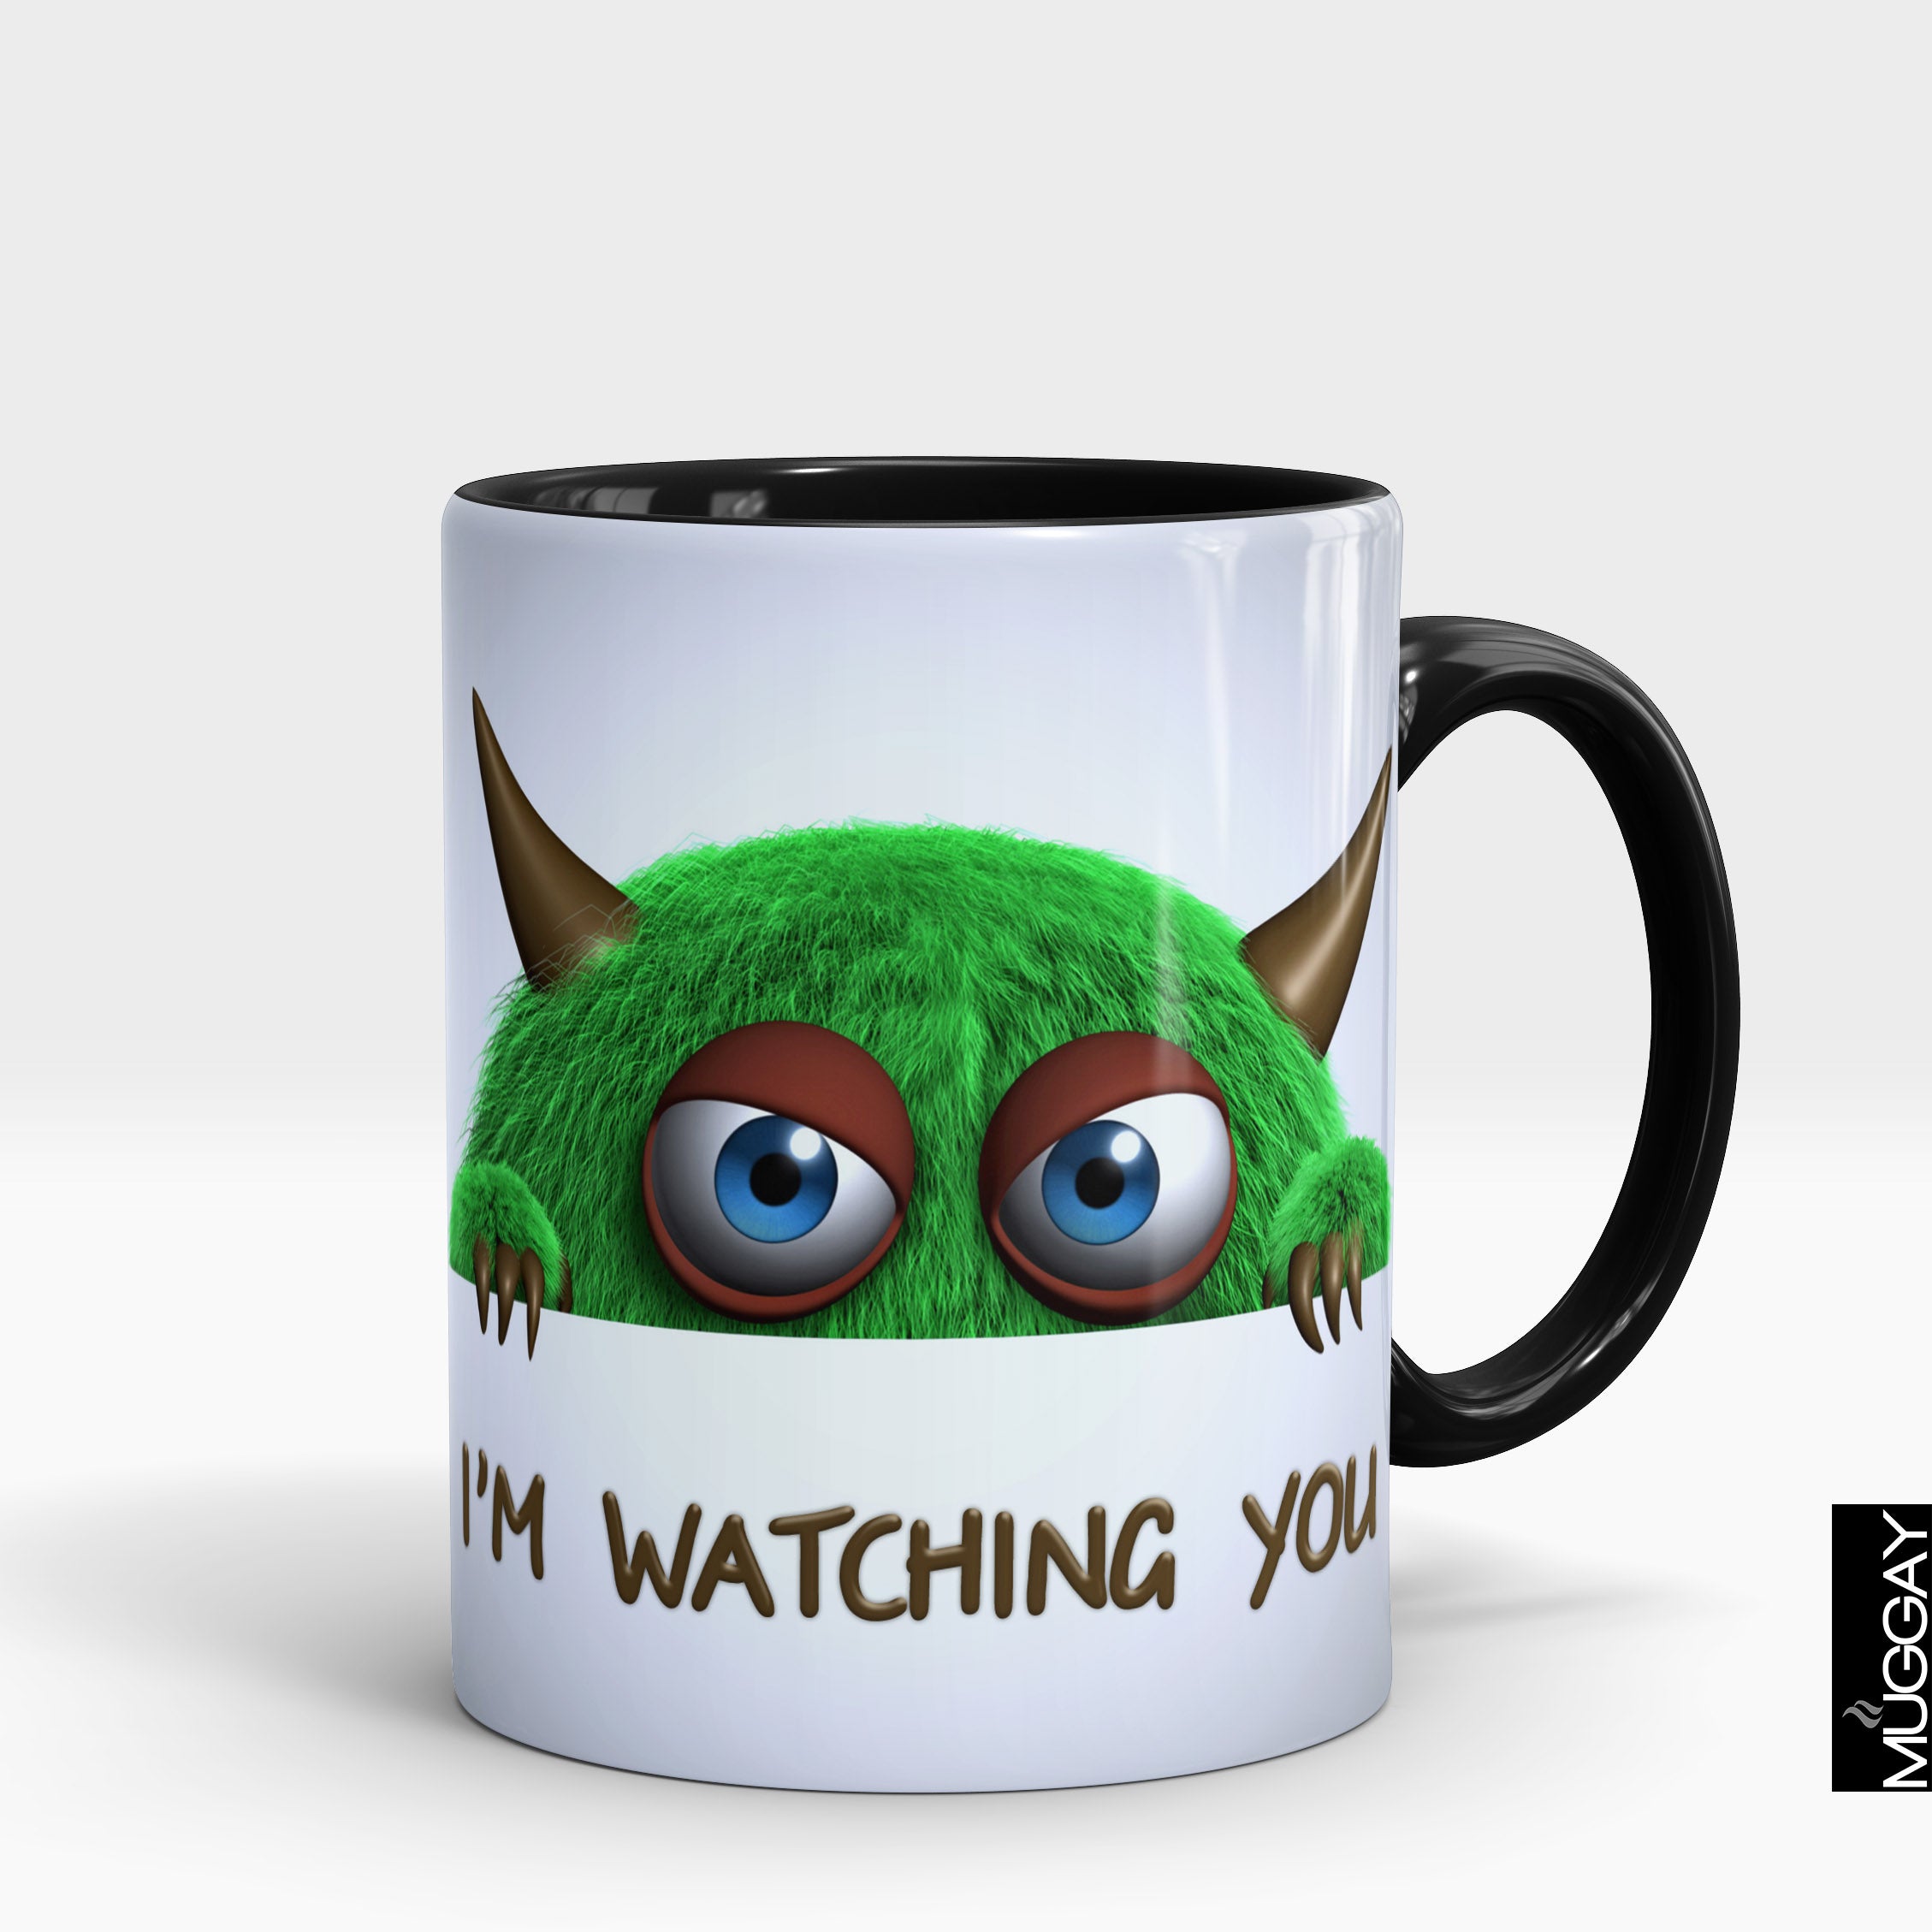 I'm watching you Mug